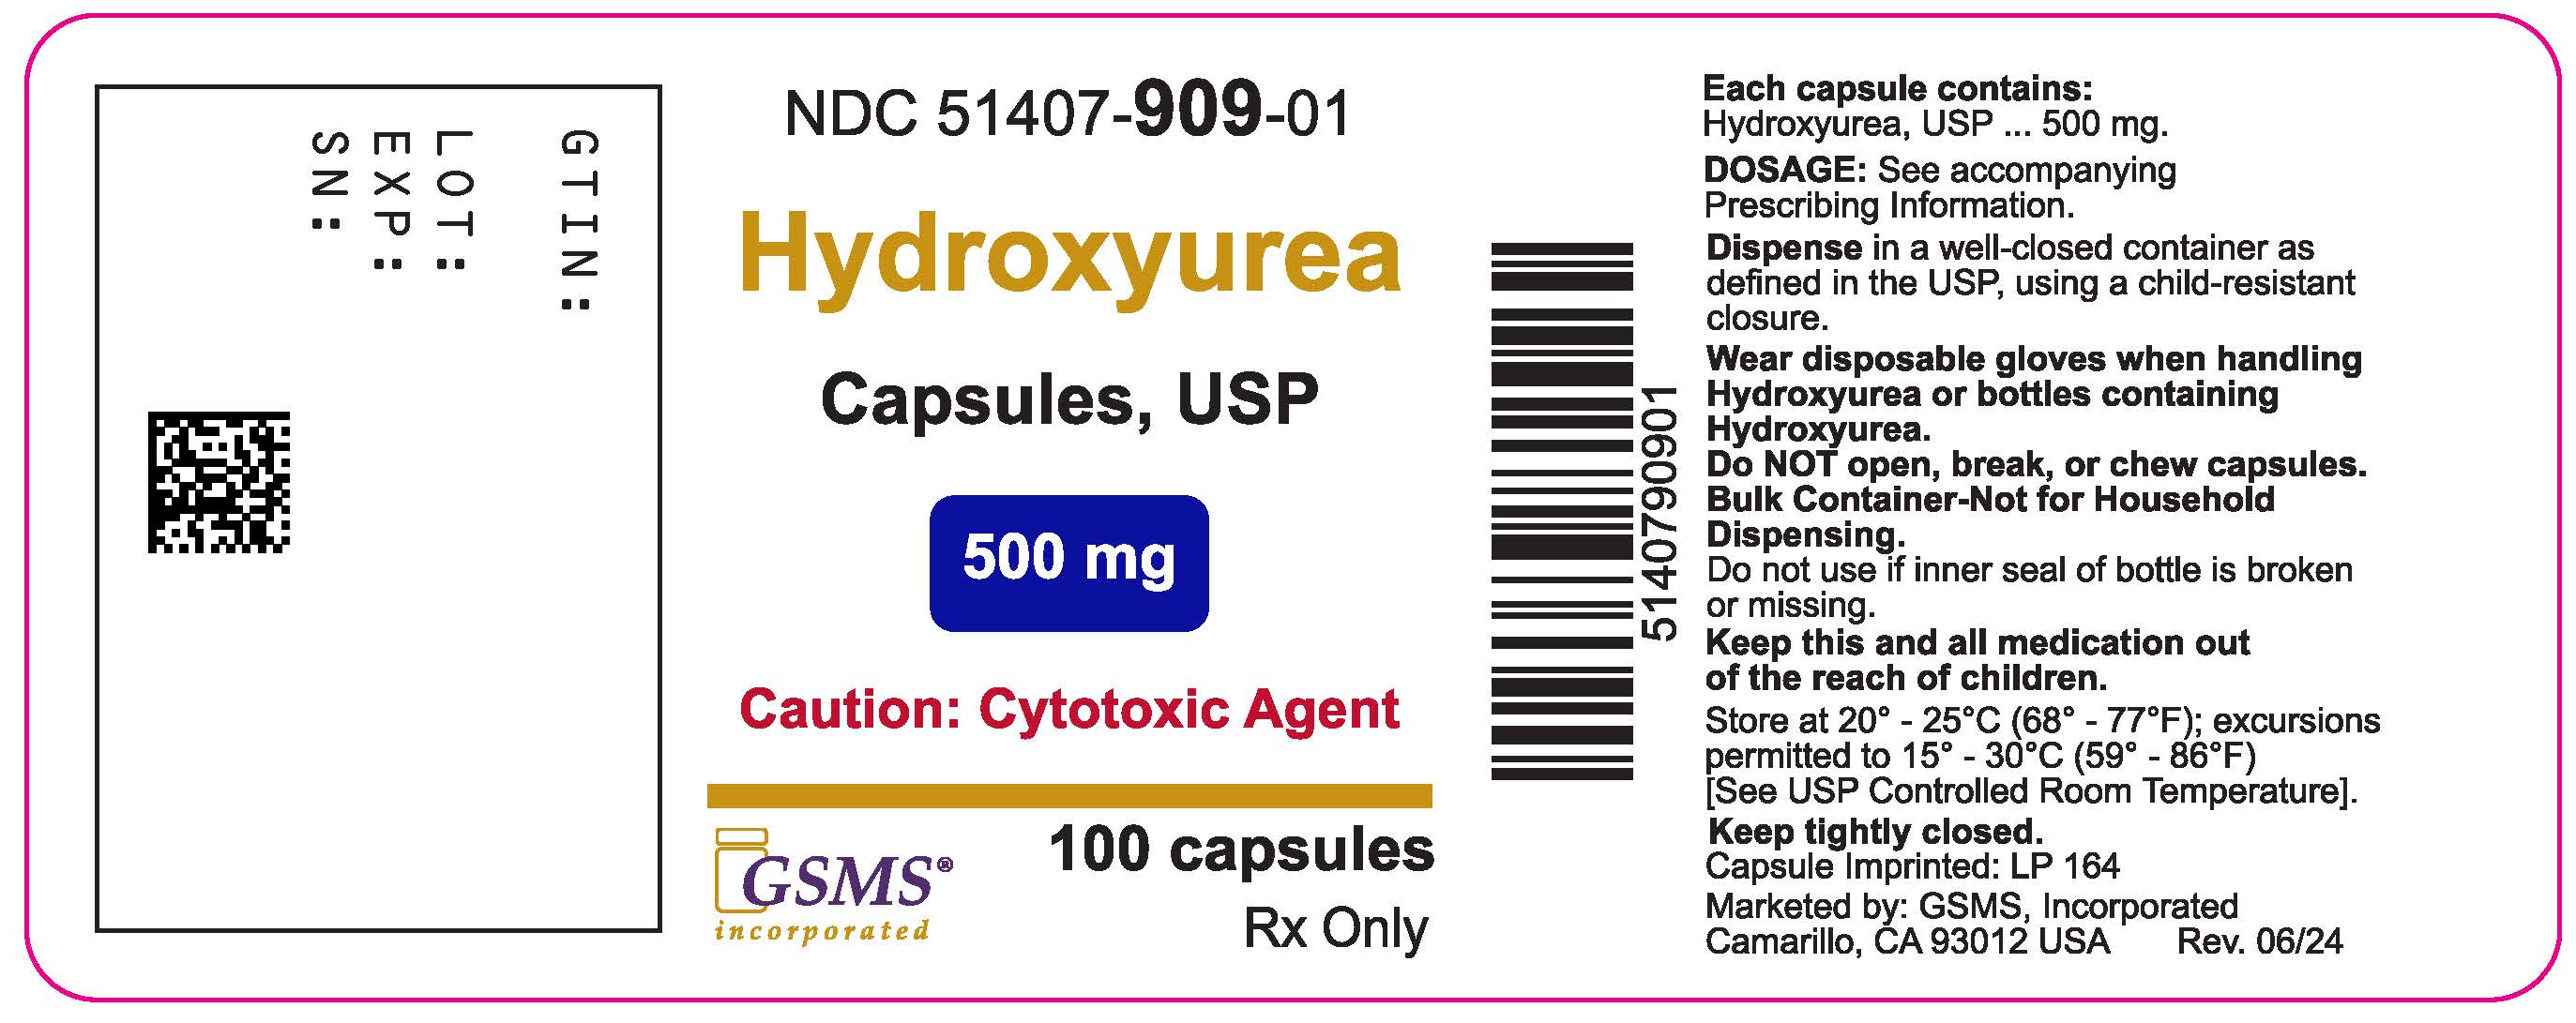 51407-909-01LB - Hydroxyurea 500 mg - Rev. 0624.jpg